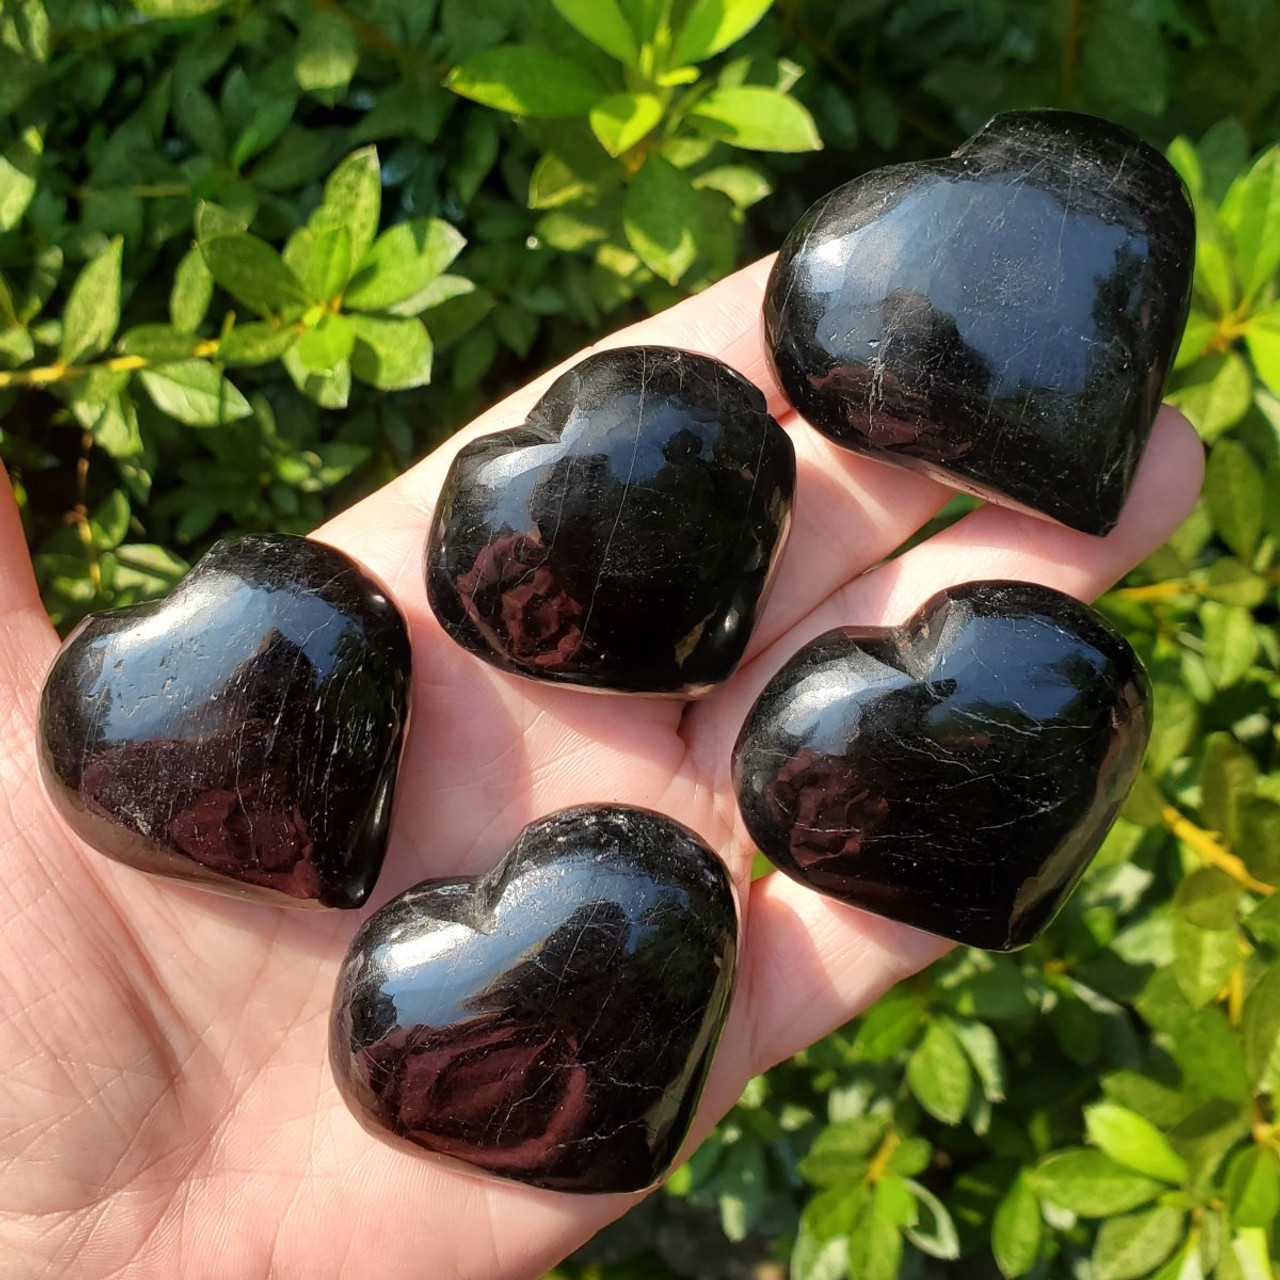 Black Tourmaline Cube Stones, Black Tourmaline Crystals & Gemstones